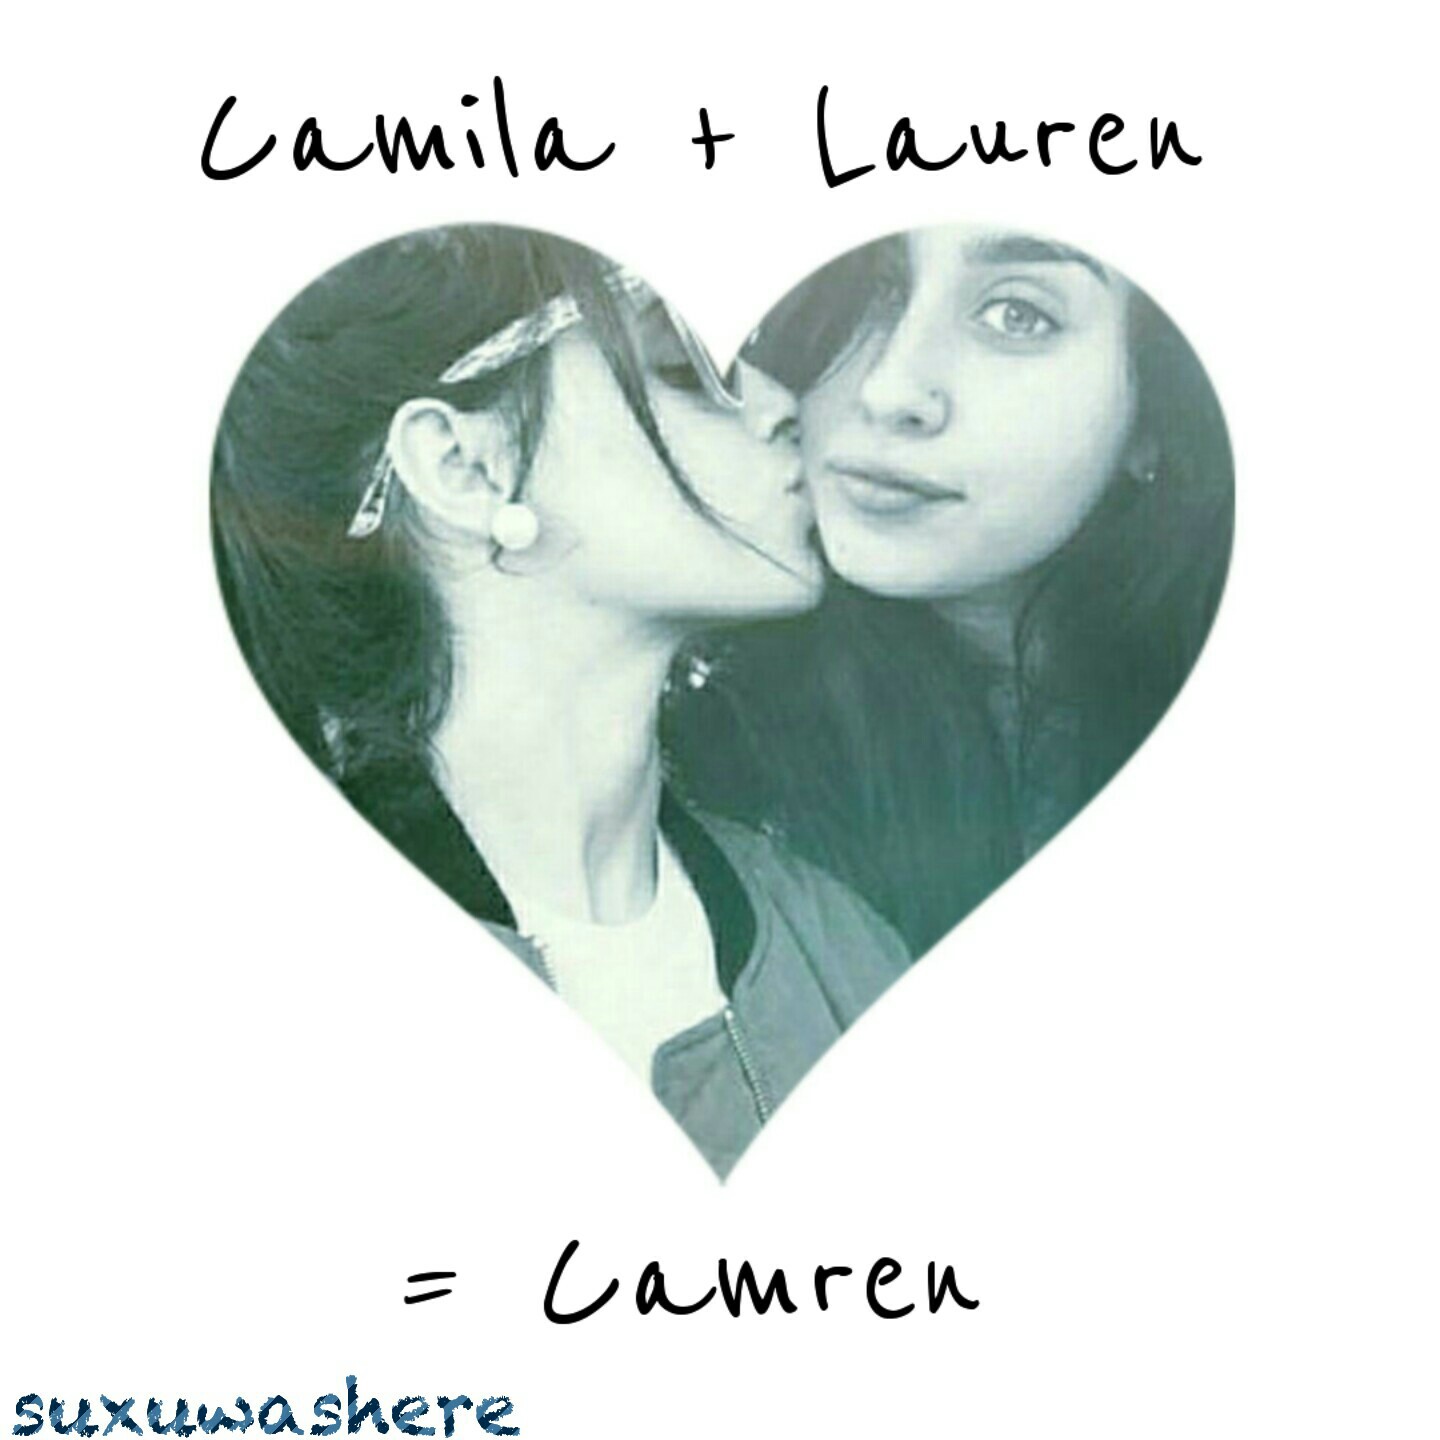 ❣OPEN ME❣

My favorite ship of Fifth H4rmony :3 

Camila- left
Lauren- right

#CamrenIsReal